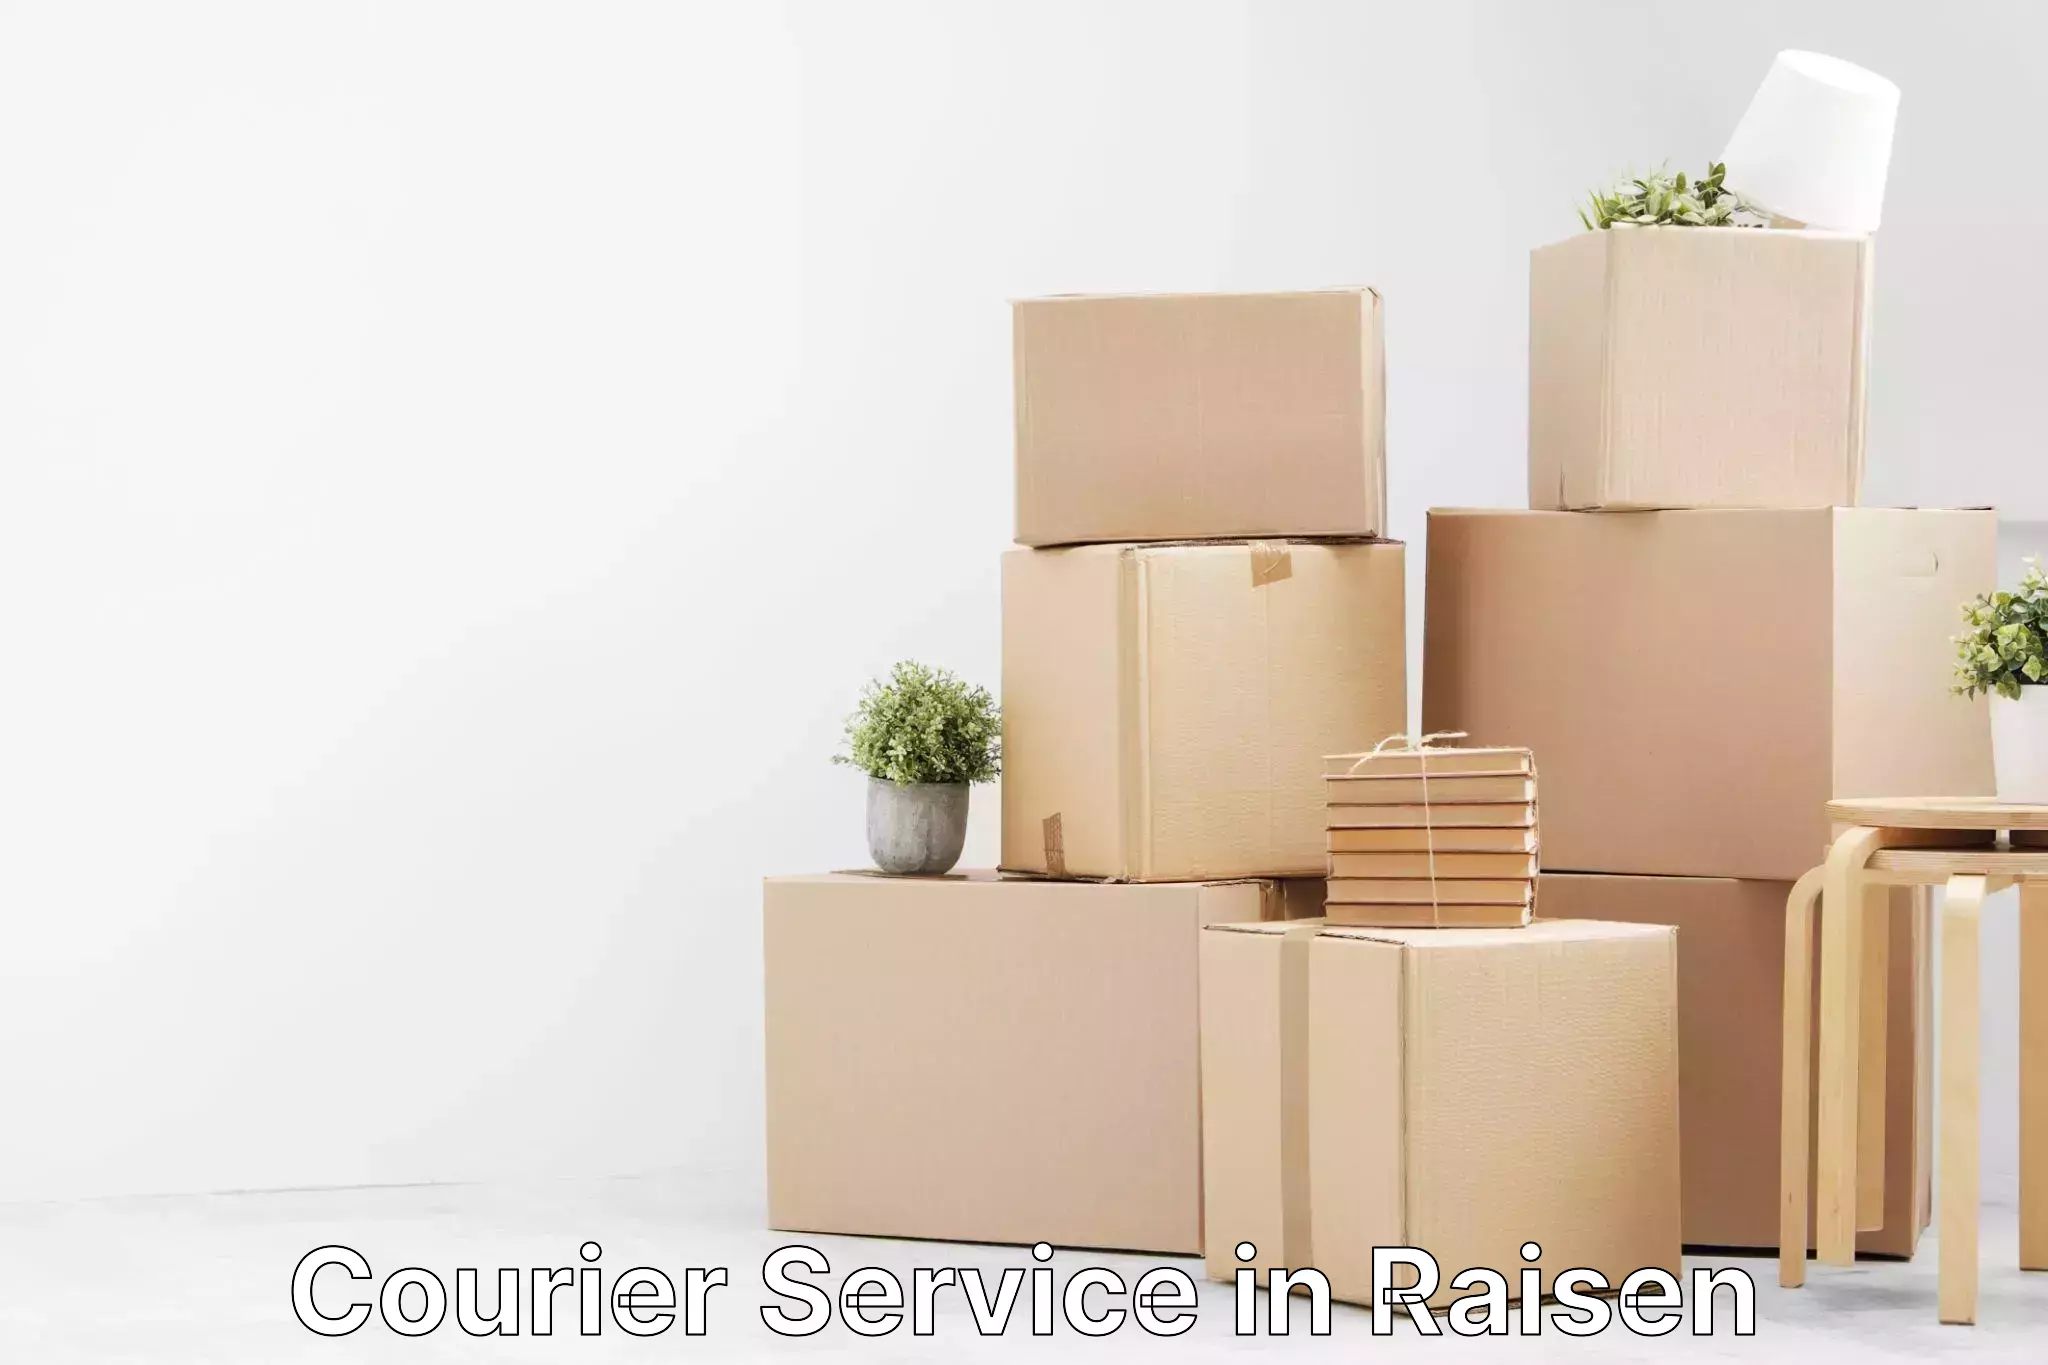 Multi-service courier options in Raisen